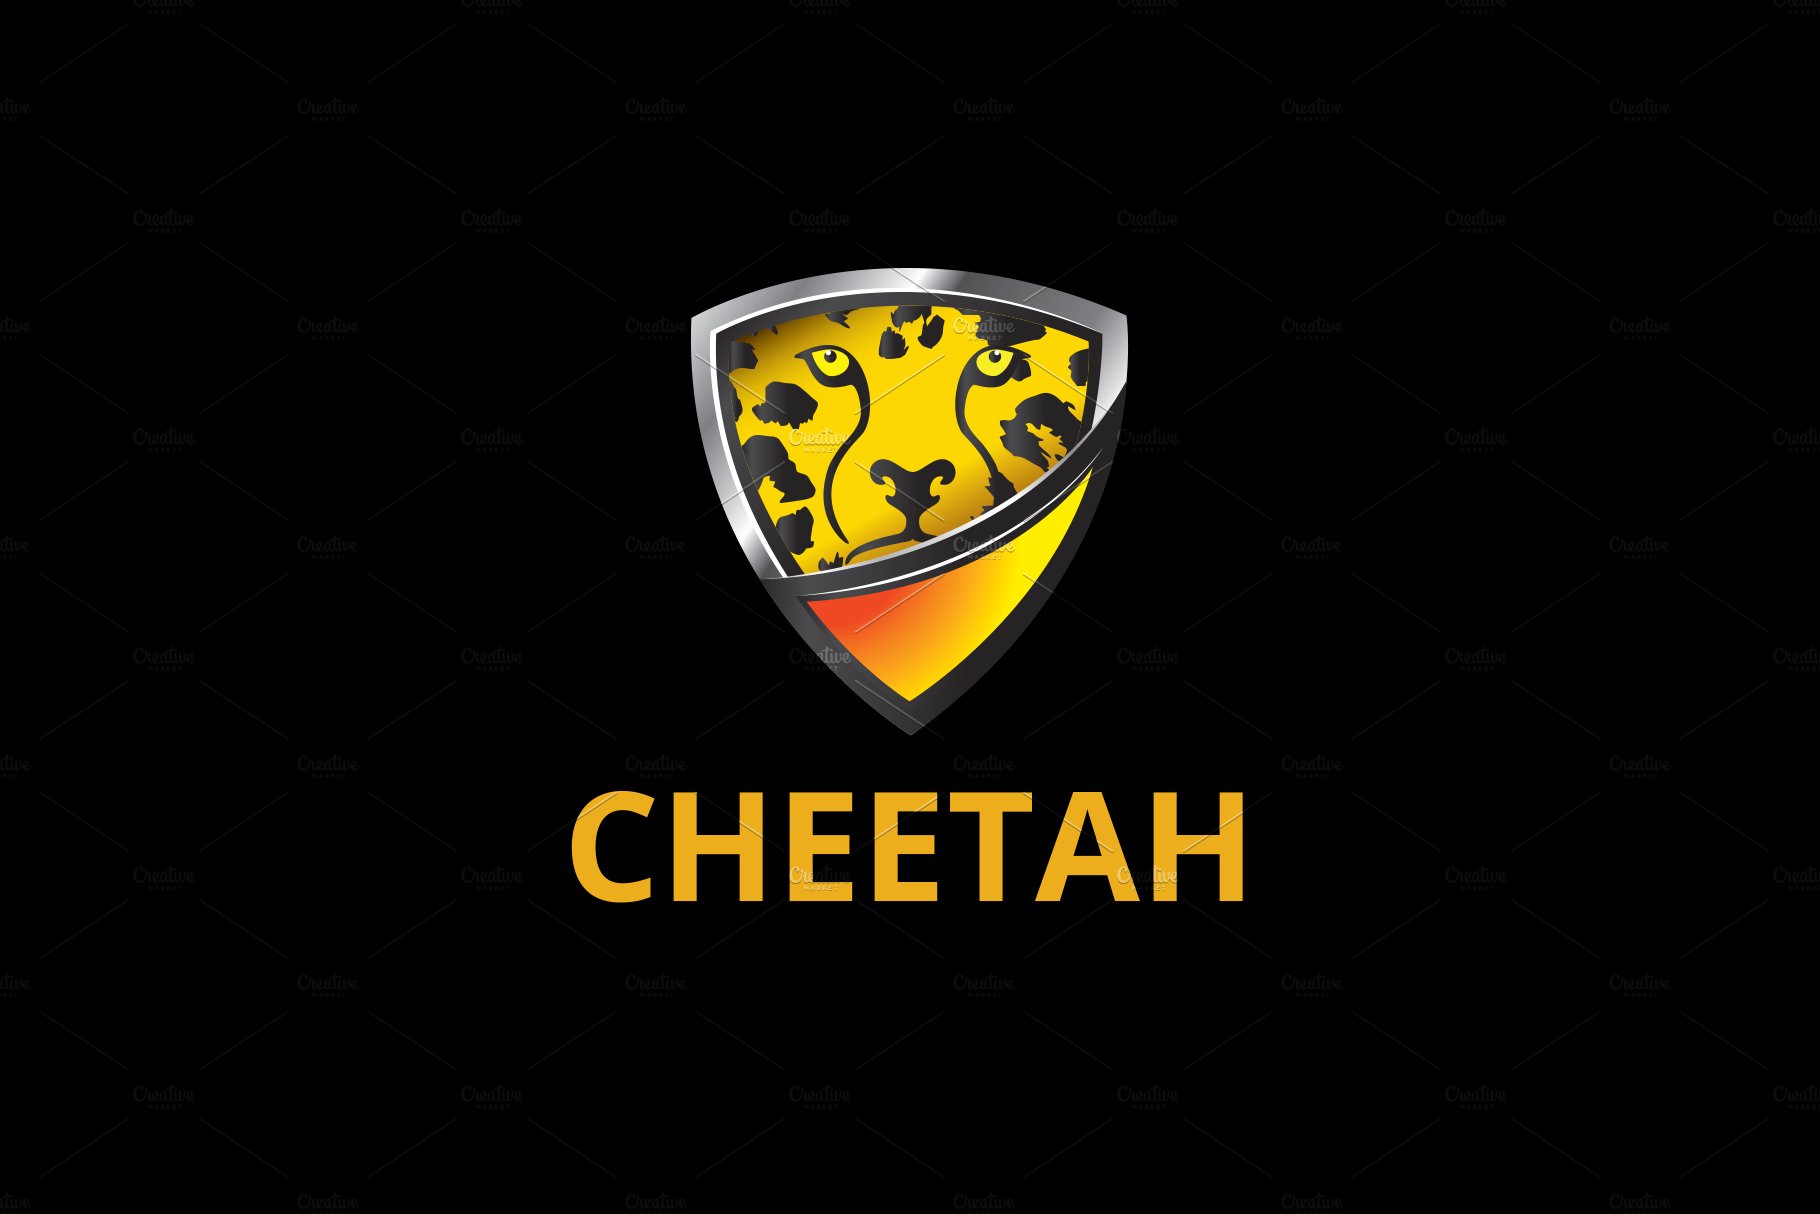 Cheetah Shield Logo preview image.